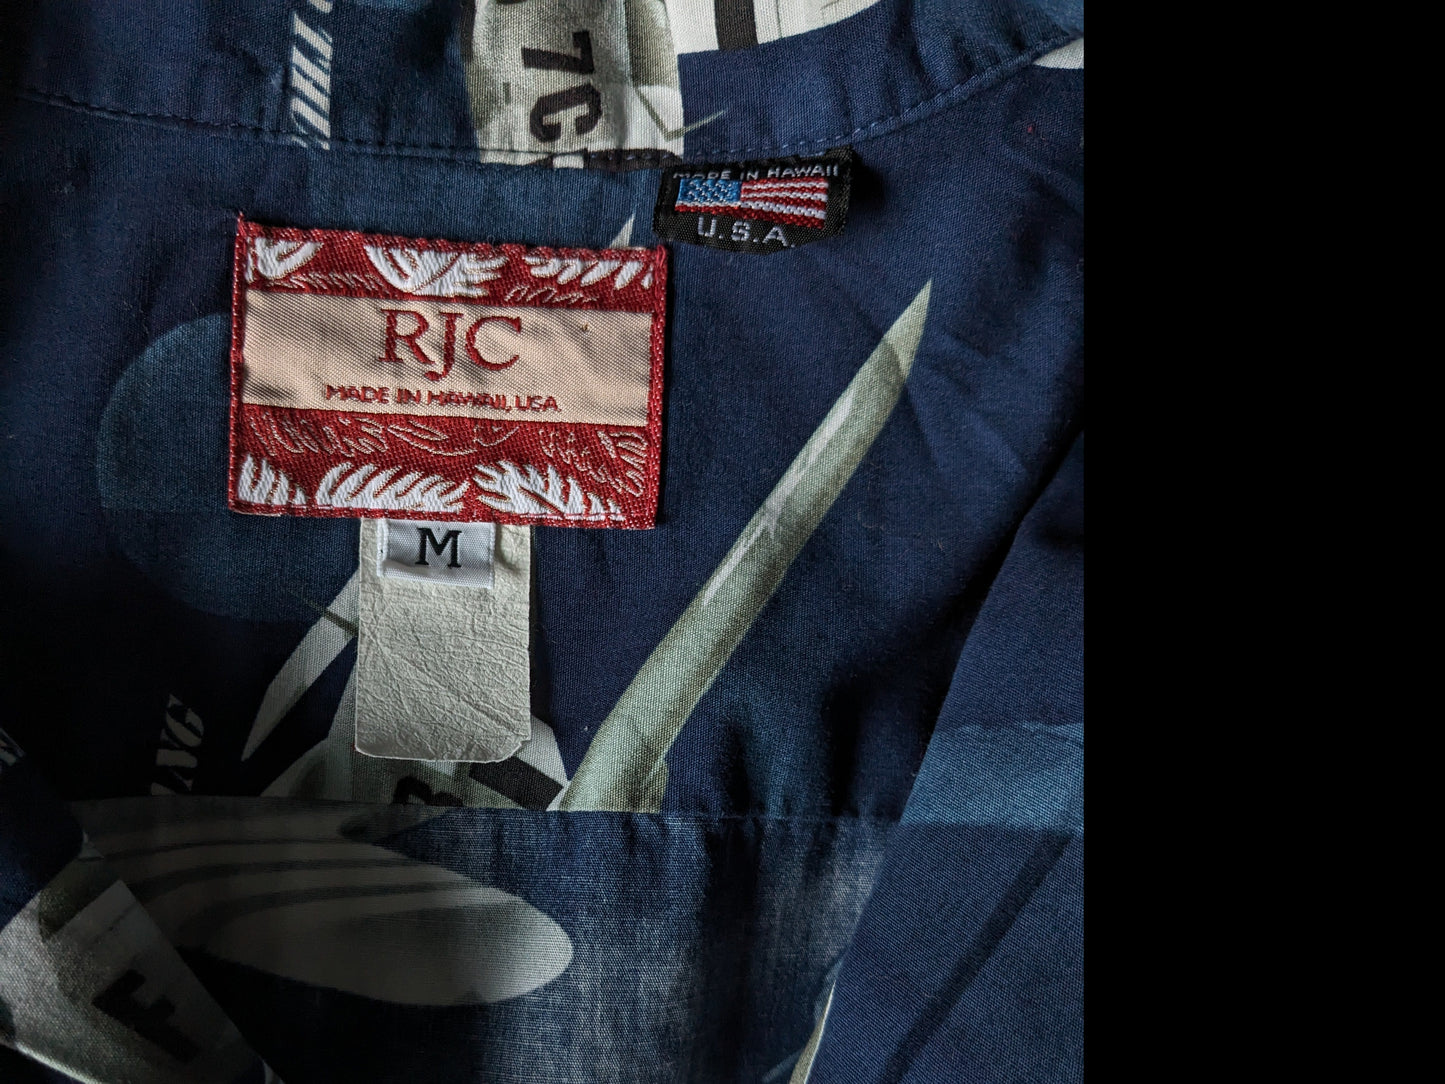 RJC Original Hawaii Shirt Short Sleeve. Impression blanc vert bleu. Taille M. Made à Hawaï.